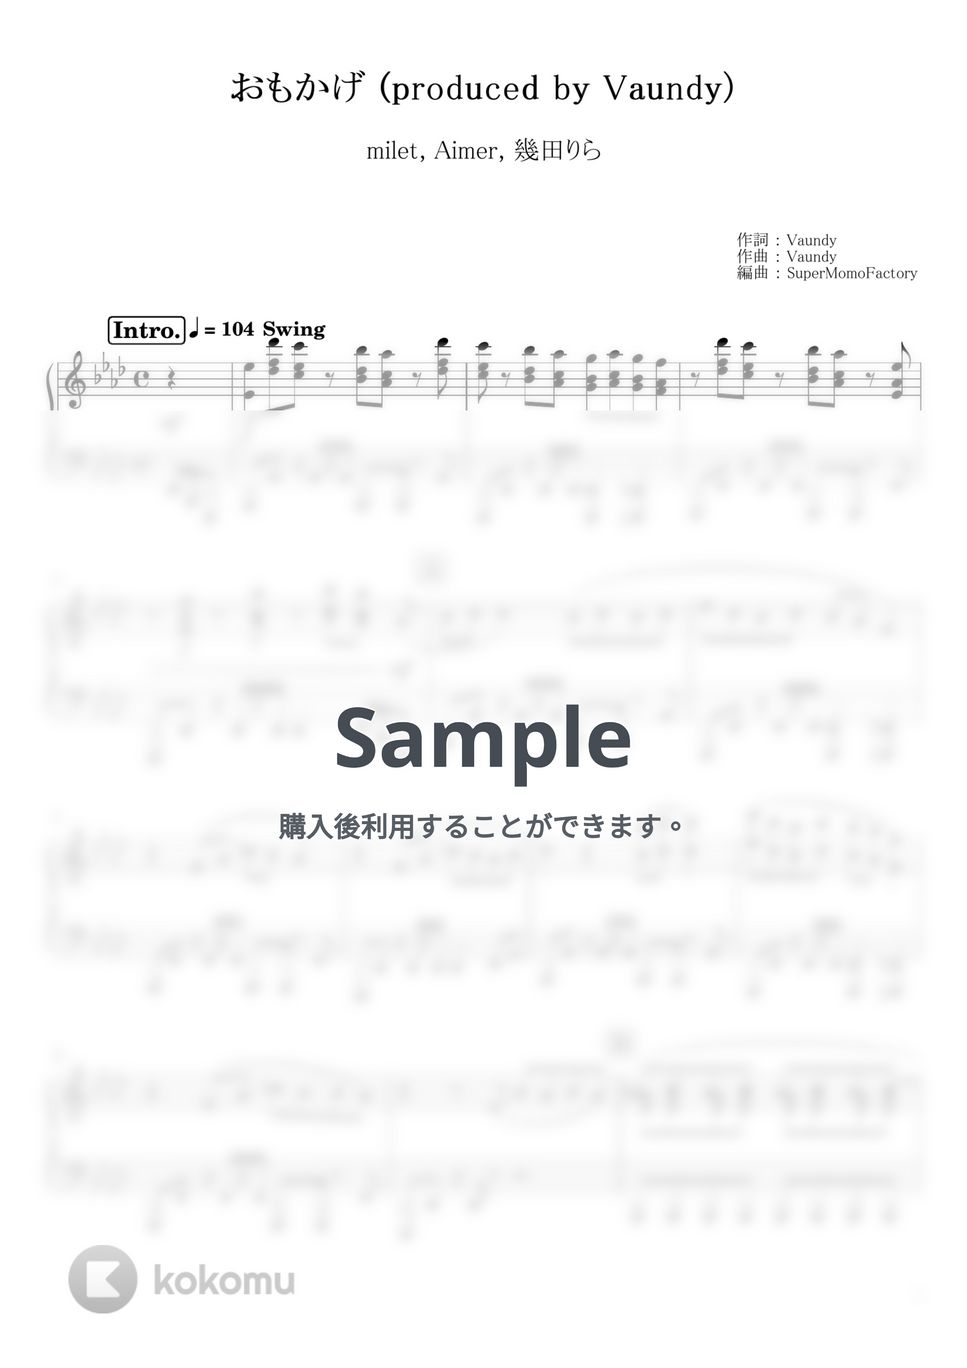 milet, Aimer, 幾田りら - おもかげ (produced by Vaundy) (ピアノソロ / 上級) by SuperMomoFactory